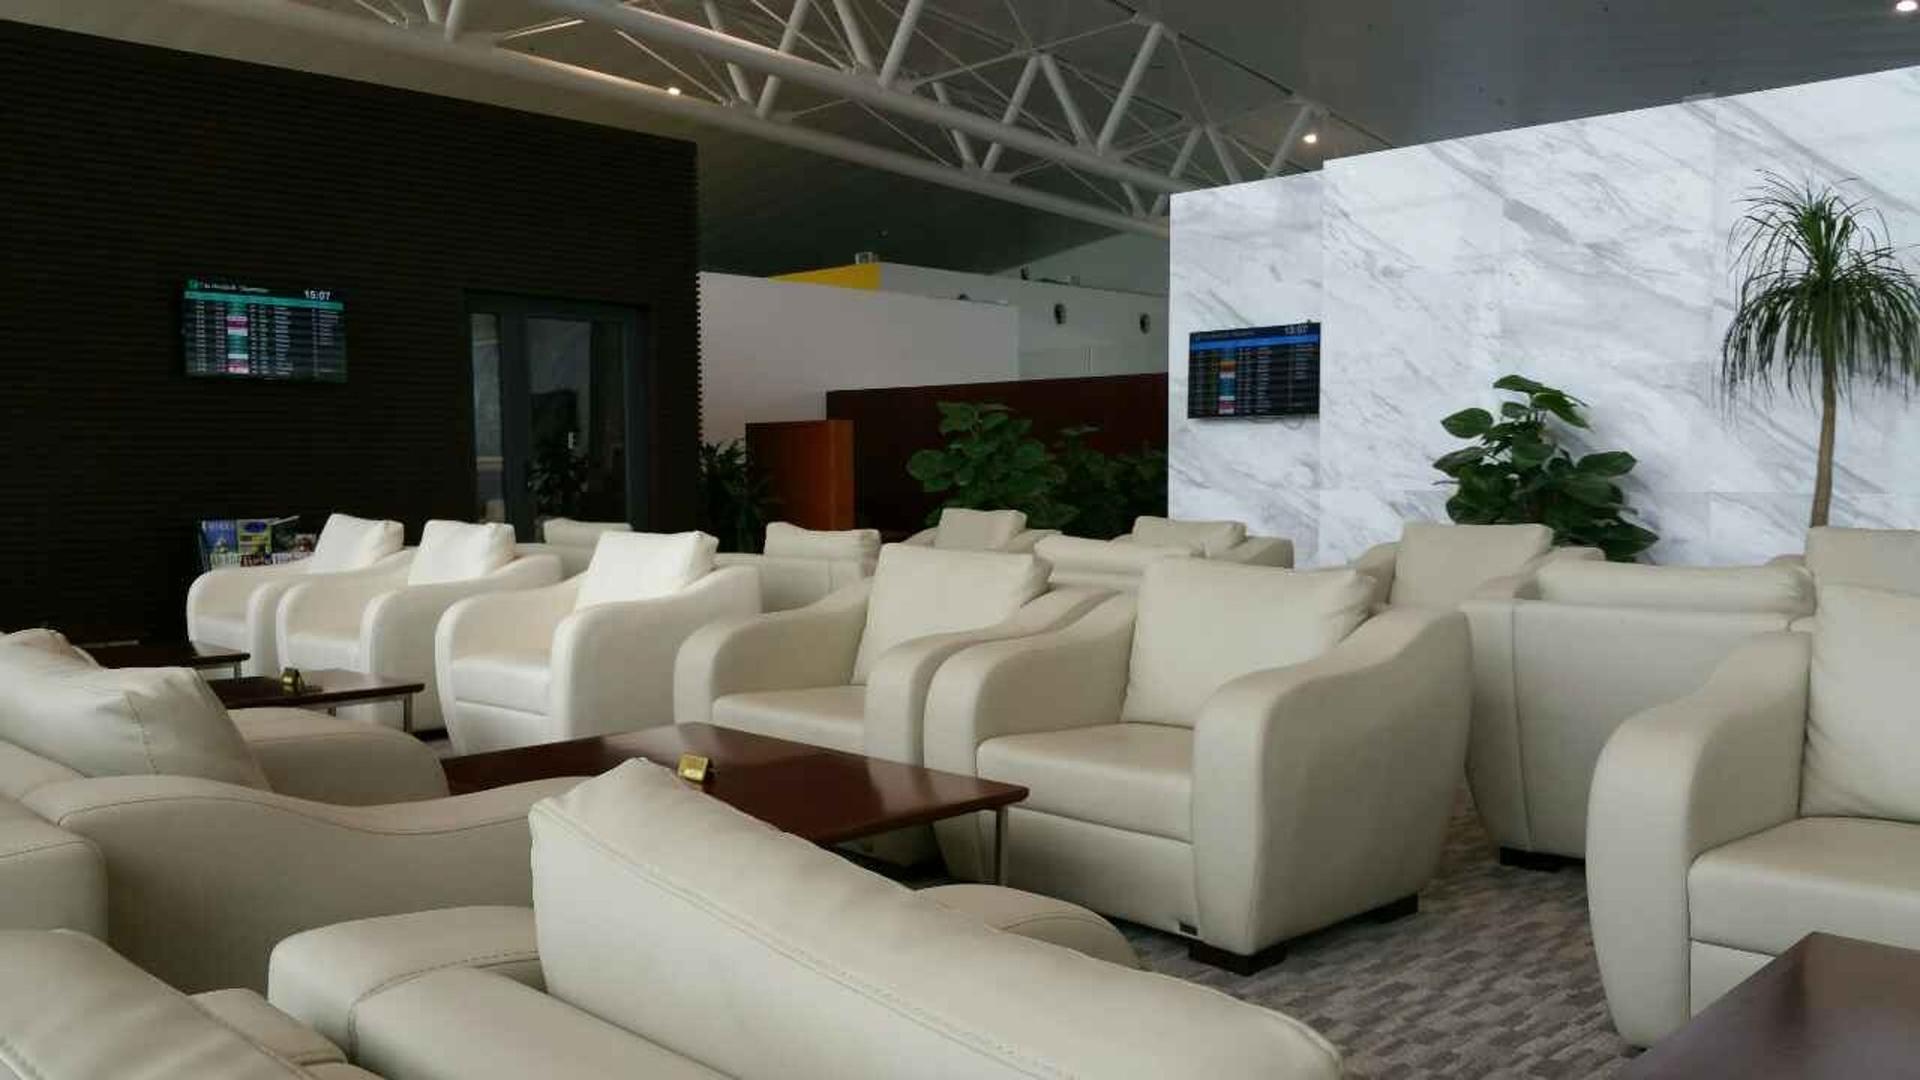 Noi Bai International Airport Business Lounge image 7 of 26